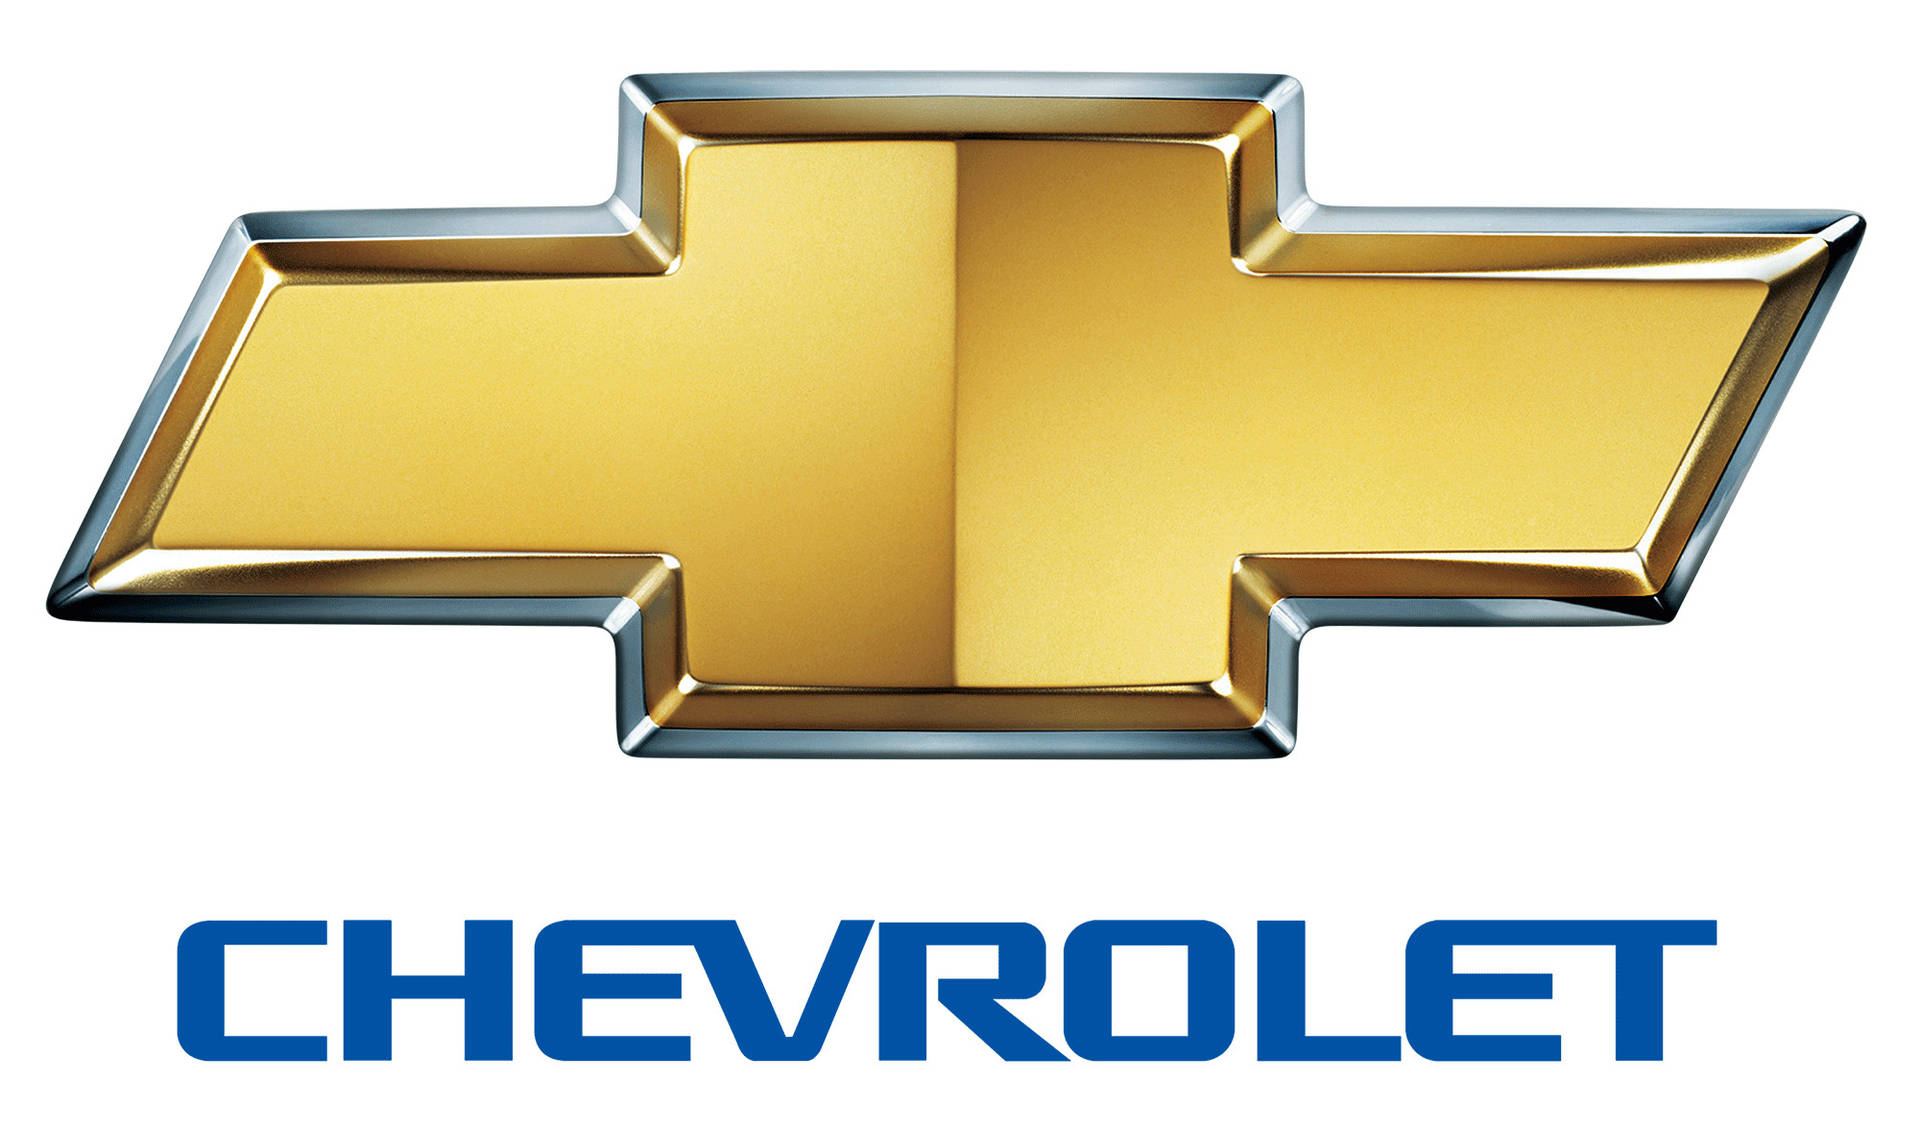 Old 2010 Chevrolet Logo Background